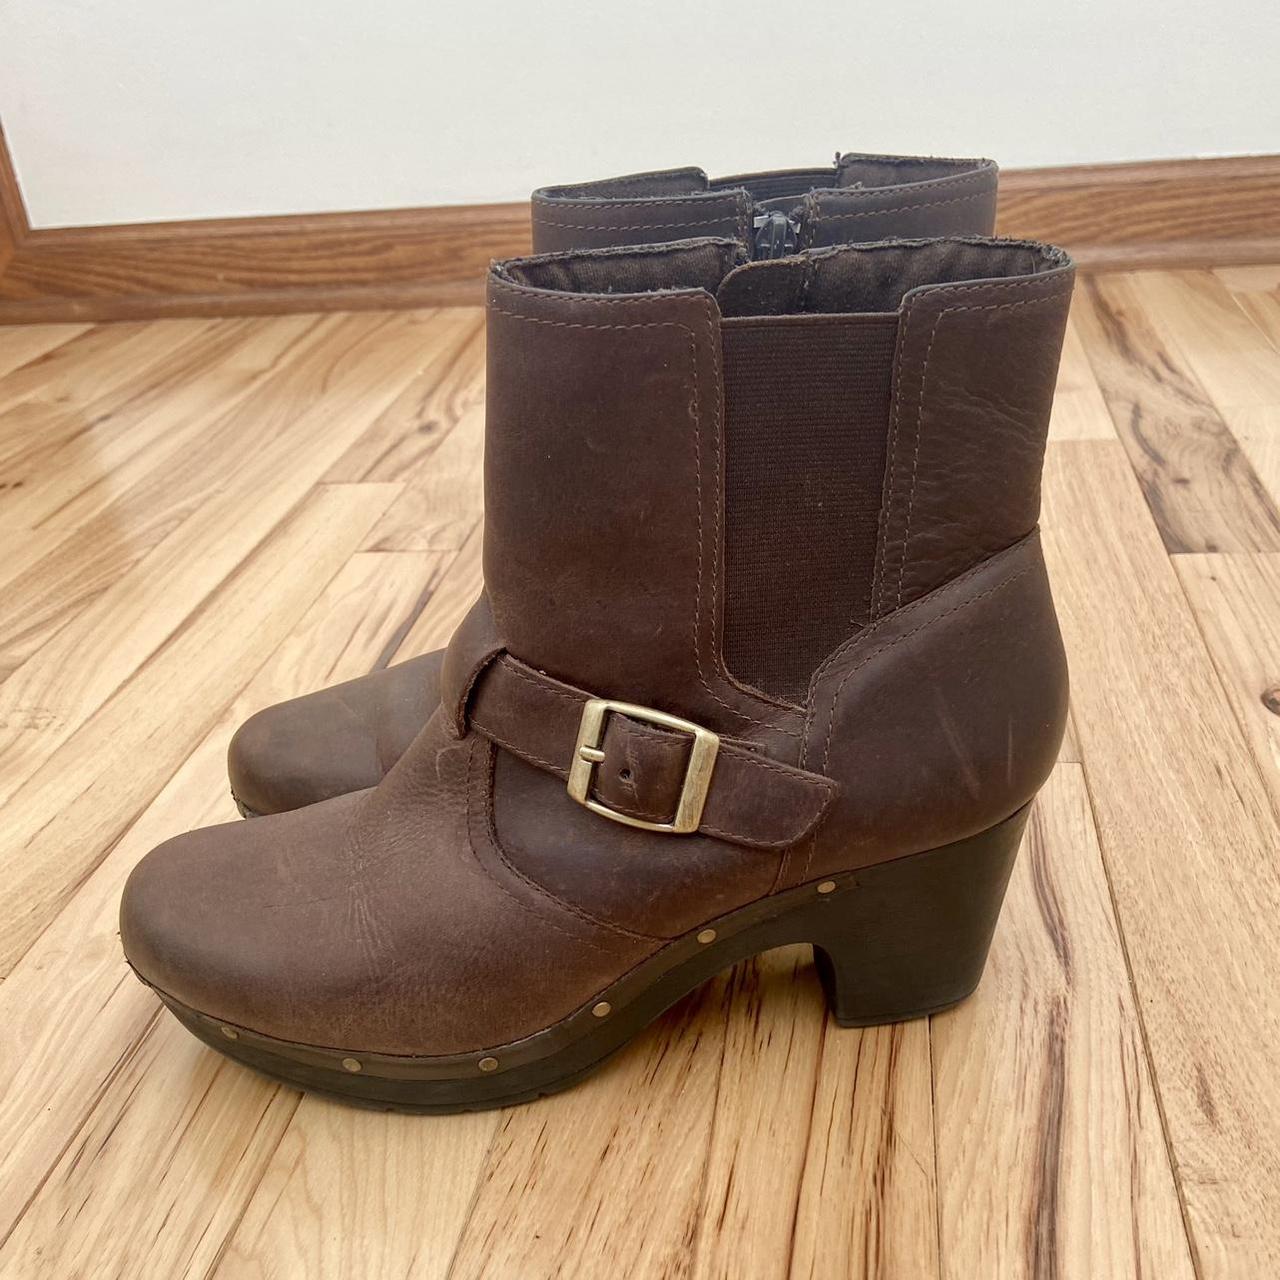 Clarks Women's Brown Boots